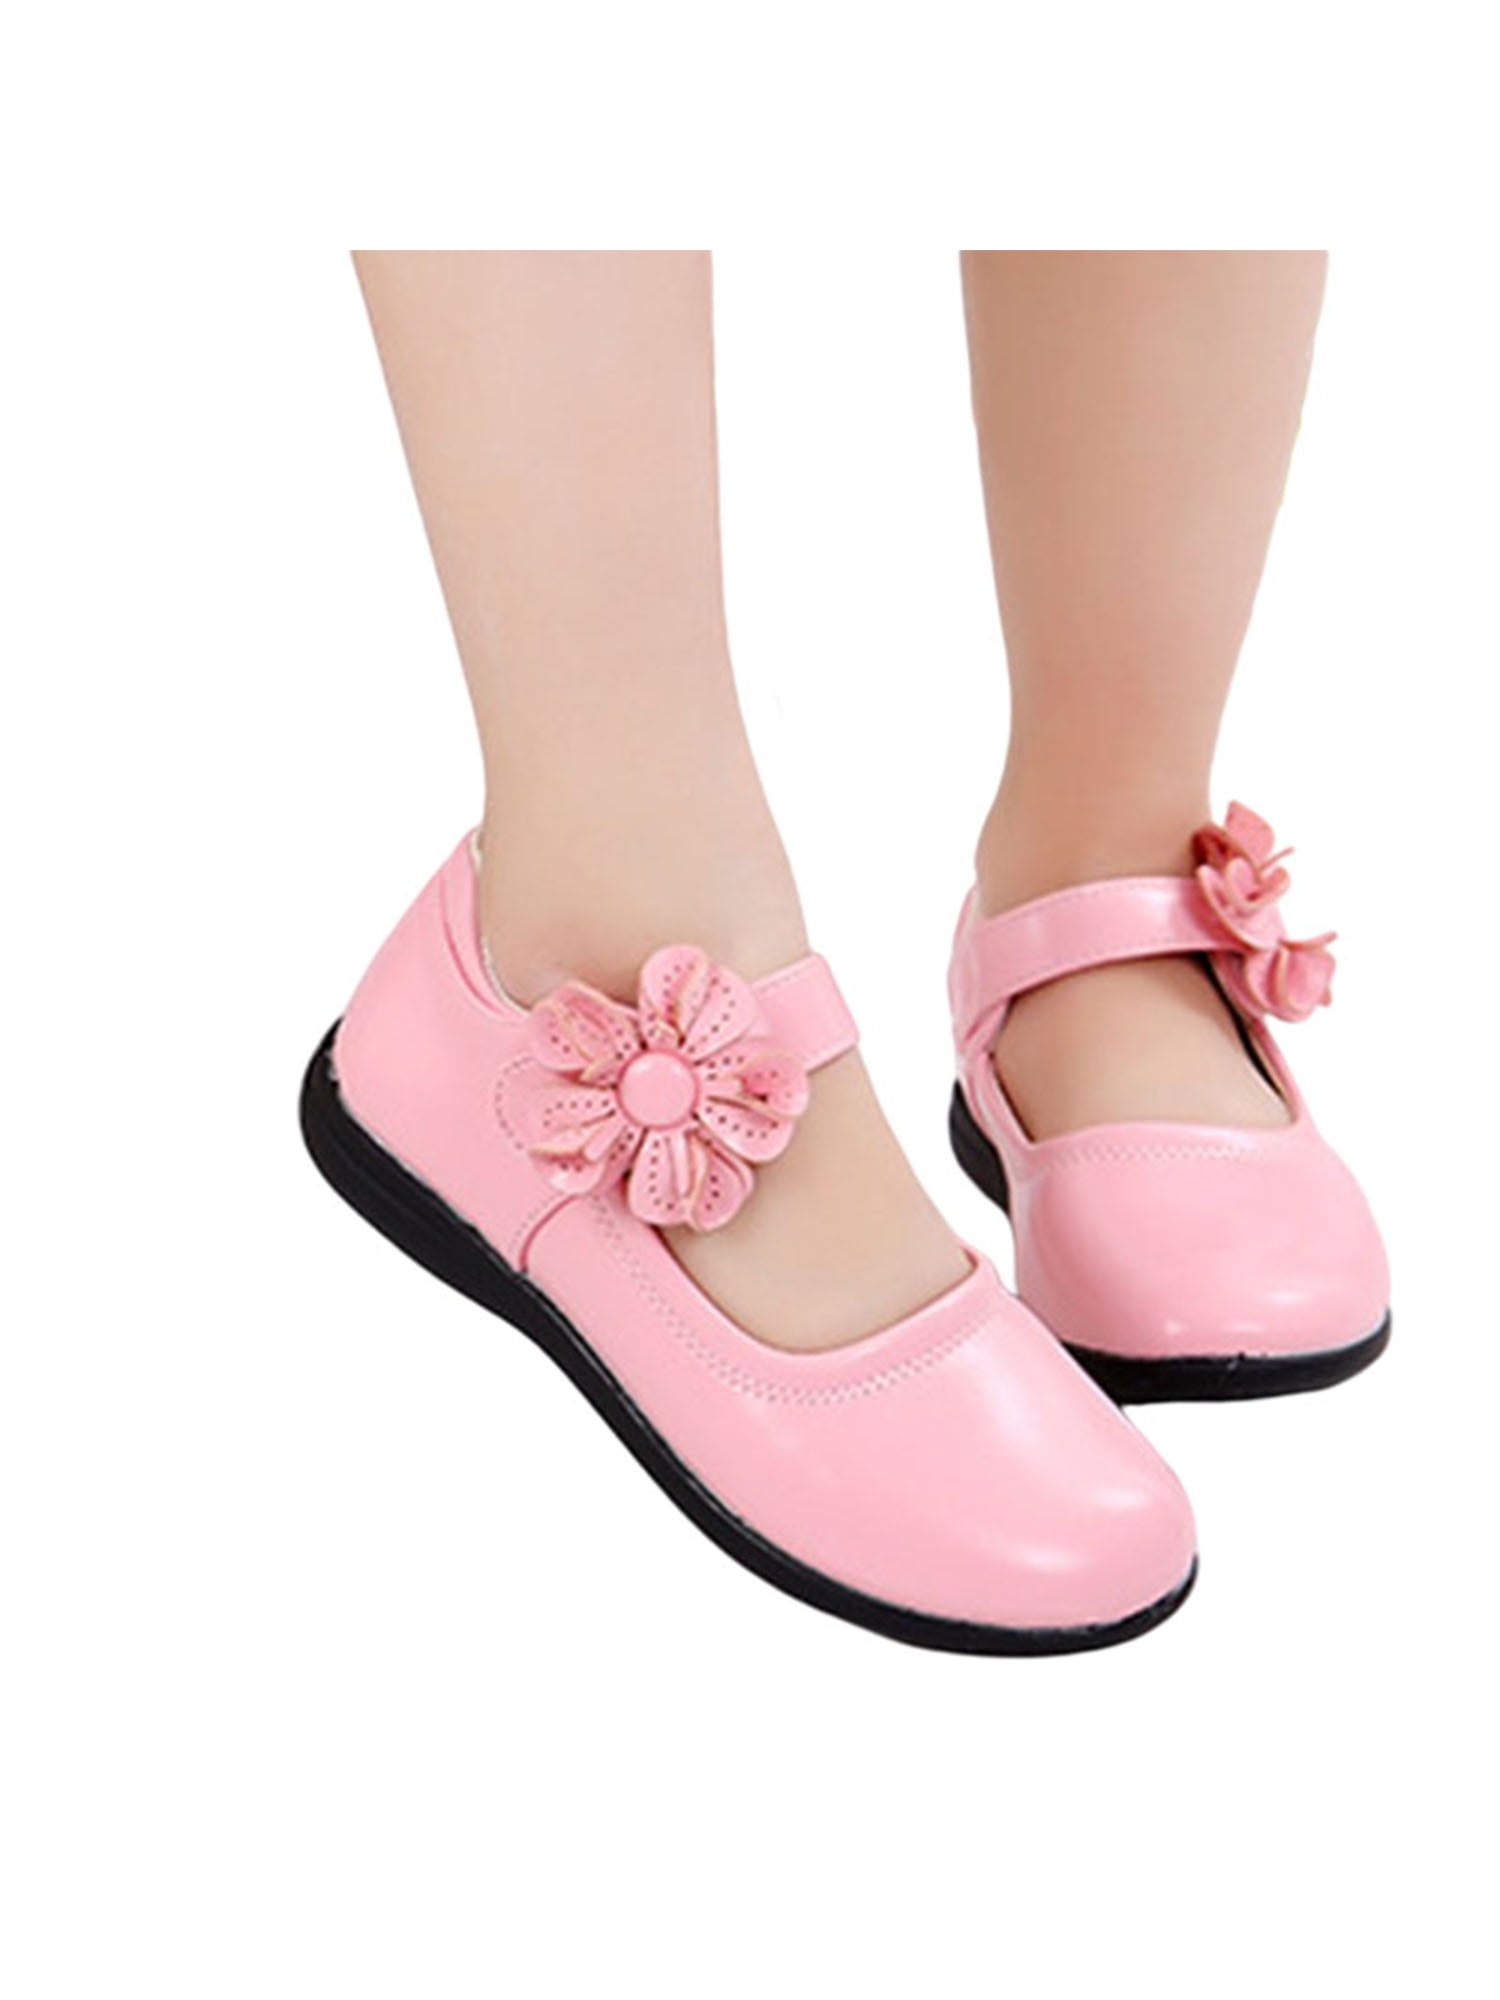 KVbaby Girls Mary Jane Uniform Shoes Flower Decor Leather Flat Dress Shoes Princess Soft Soles Shoes 